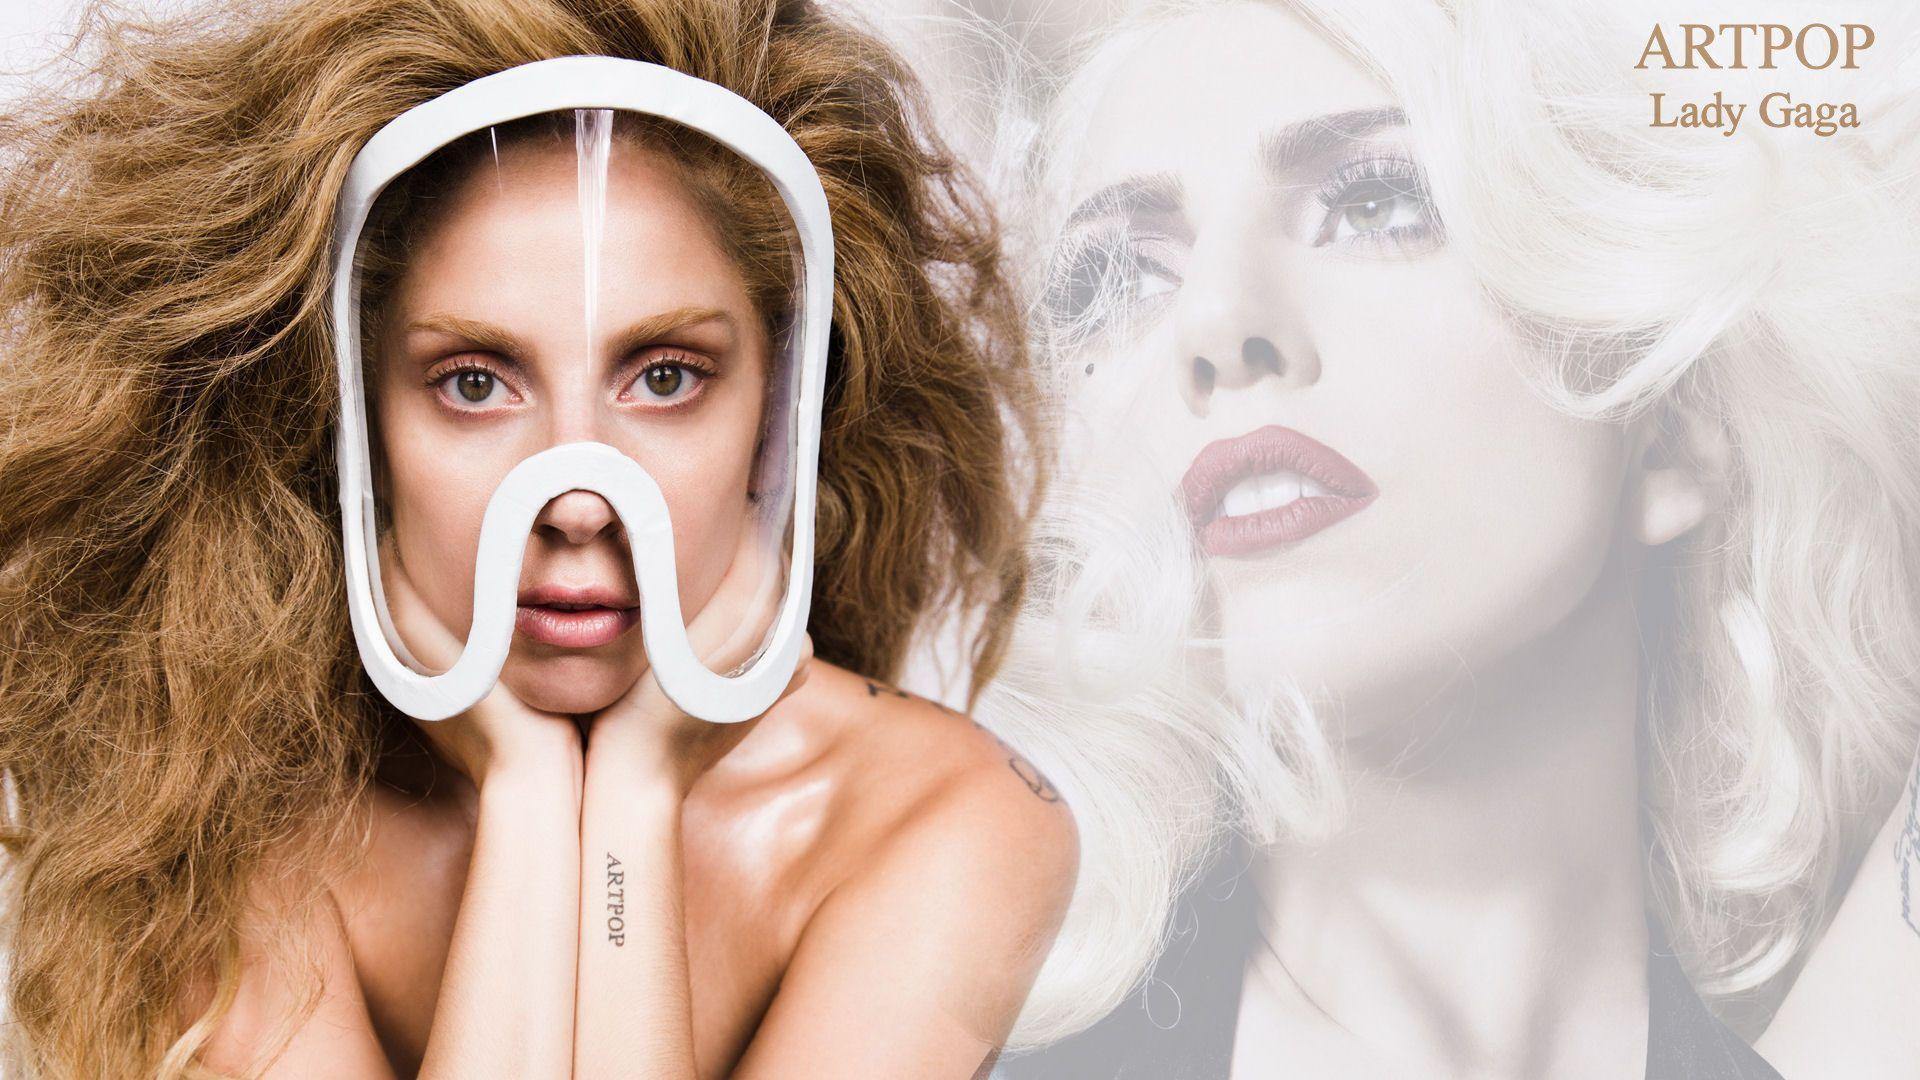 Lady Gaga ARTPOP (2013) Gaga Wallpaper